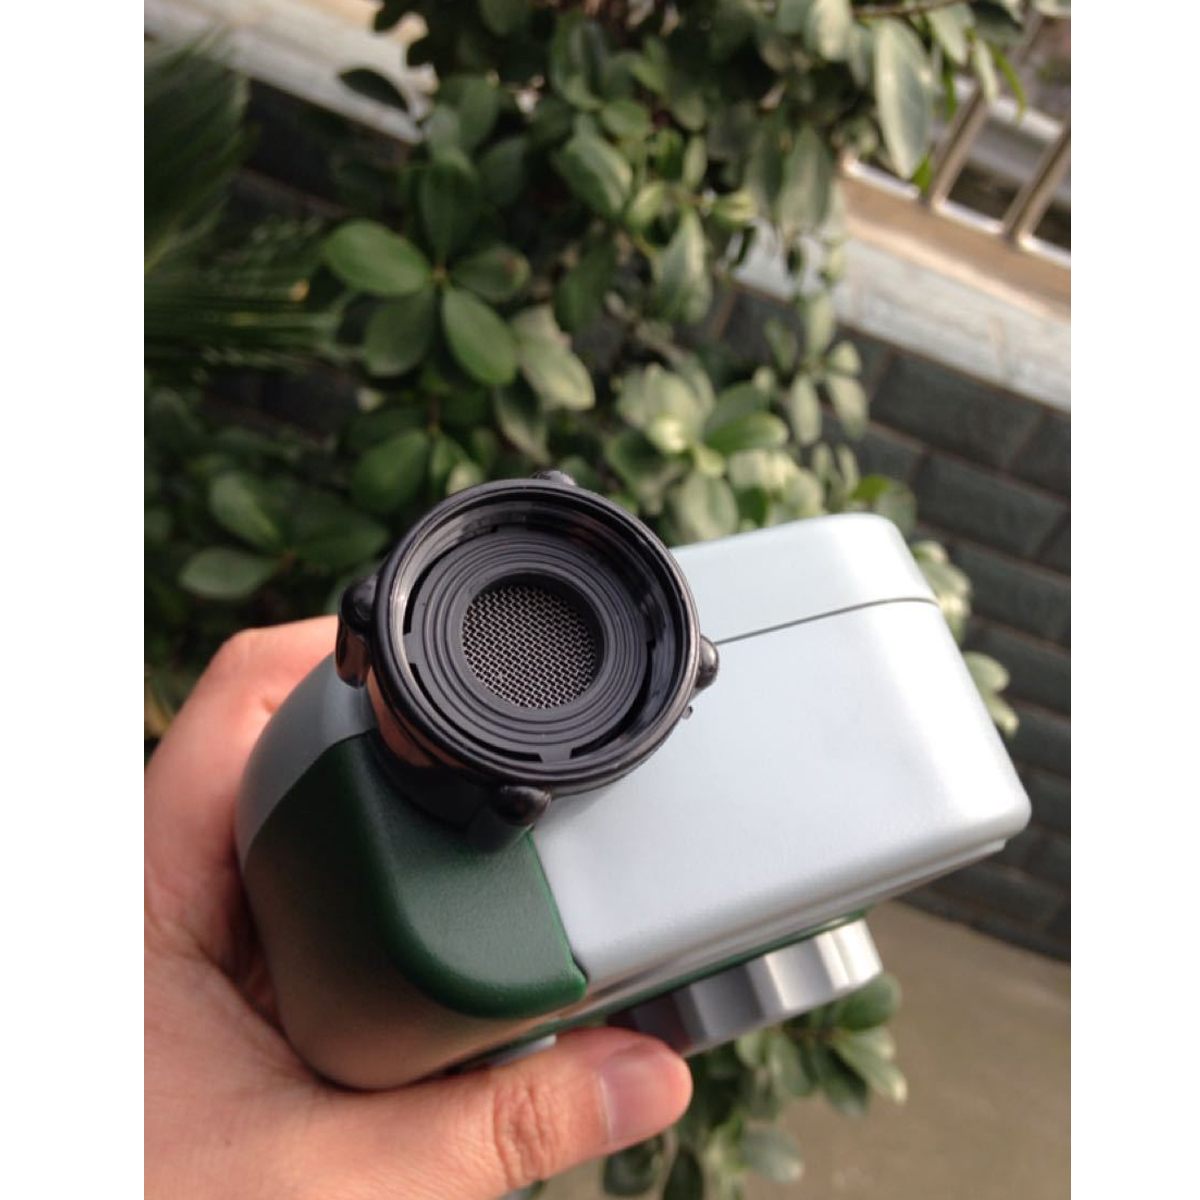 Digital-Electronic-Water-Tap-Timer-LCD-Waterproof-DIY-Garden-Irrigation-Timer-Control-Unit-1629858-7